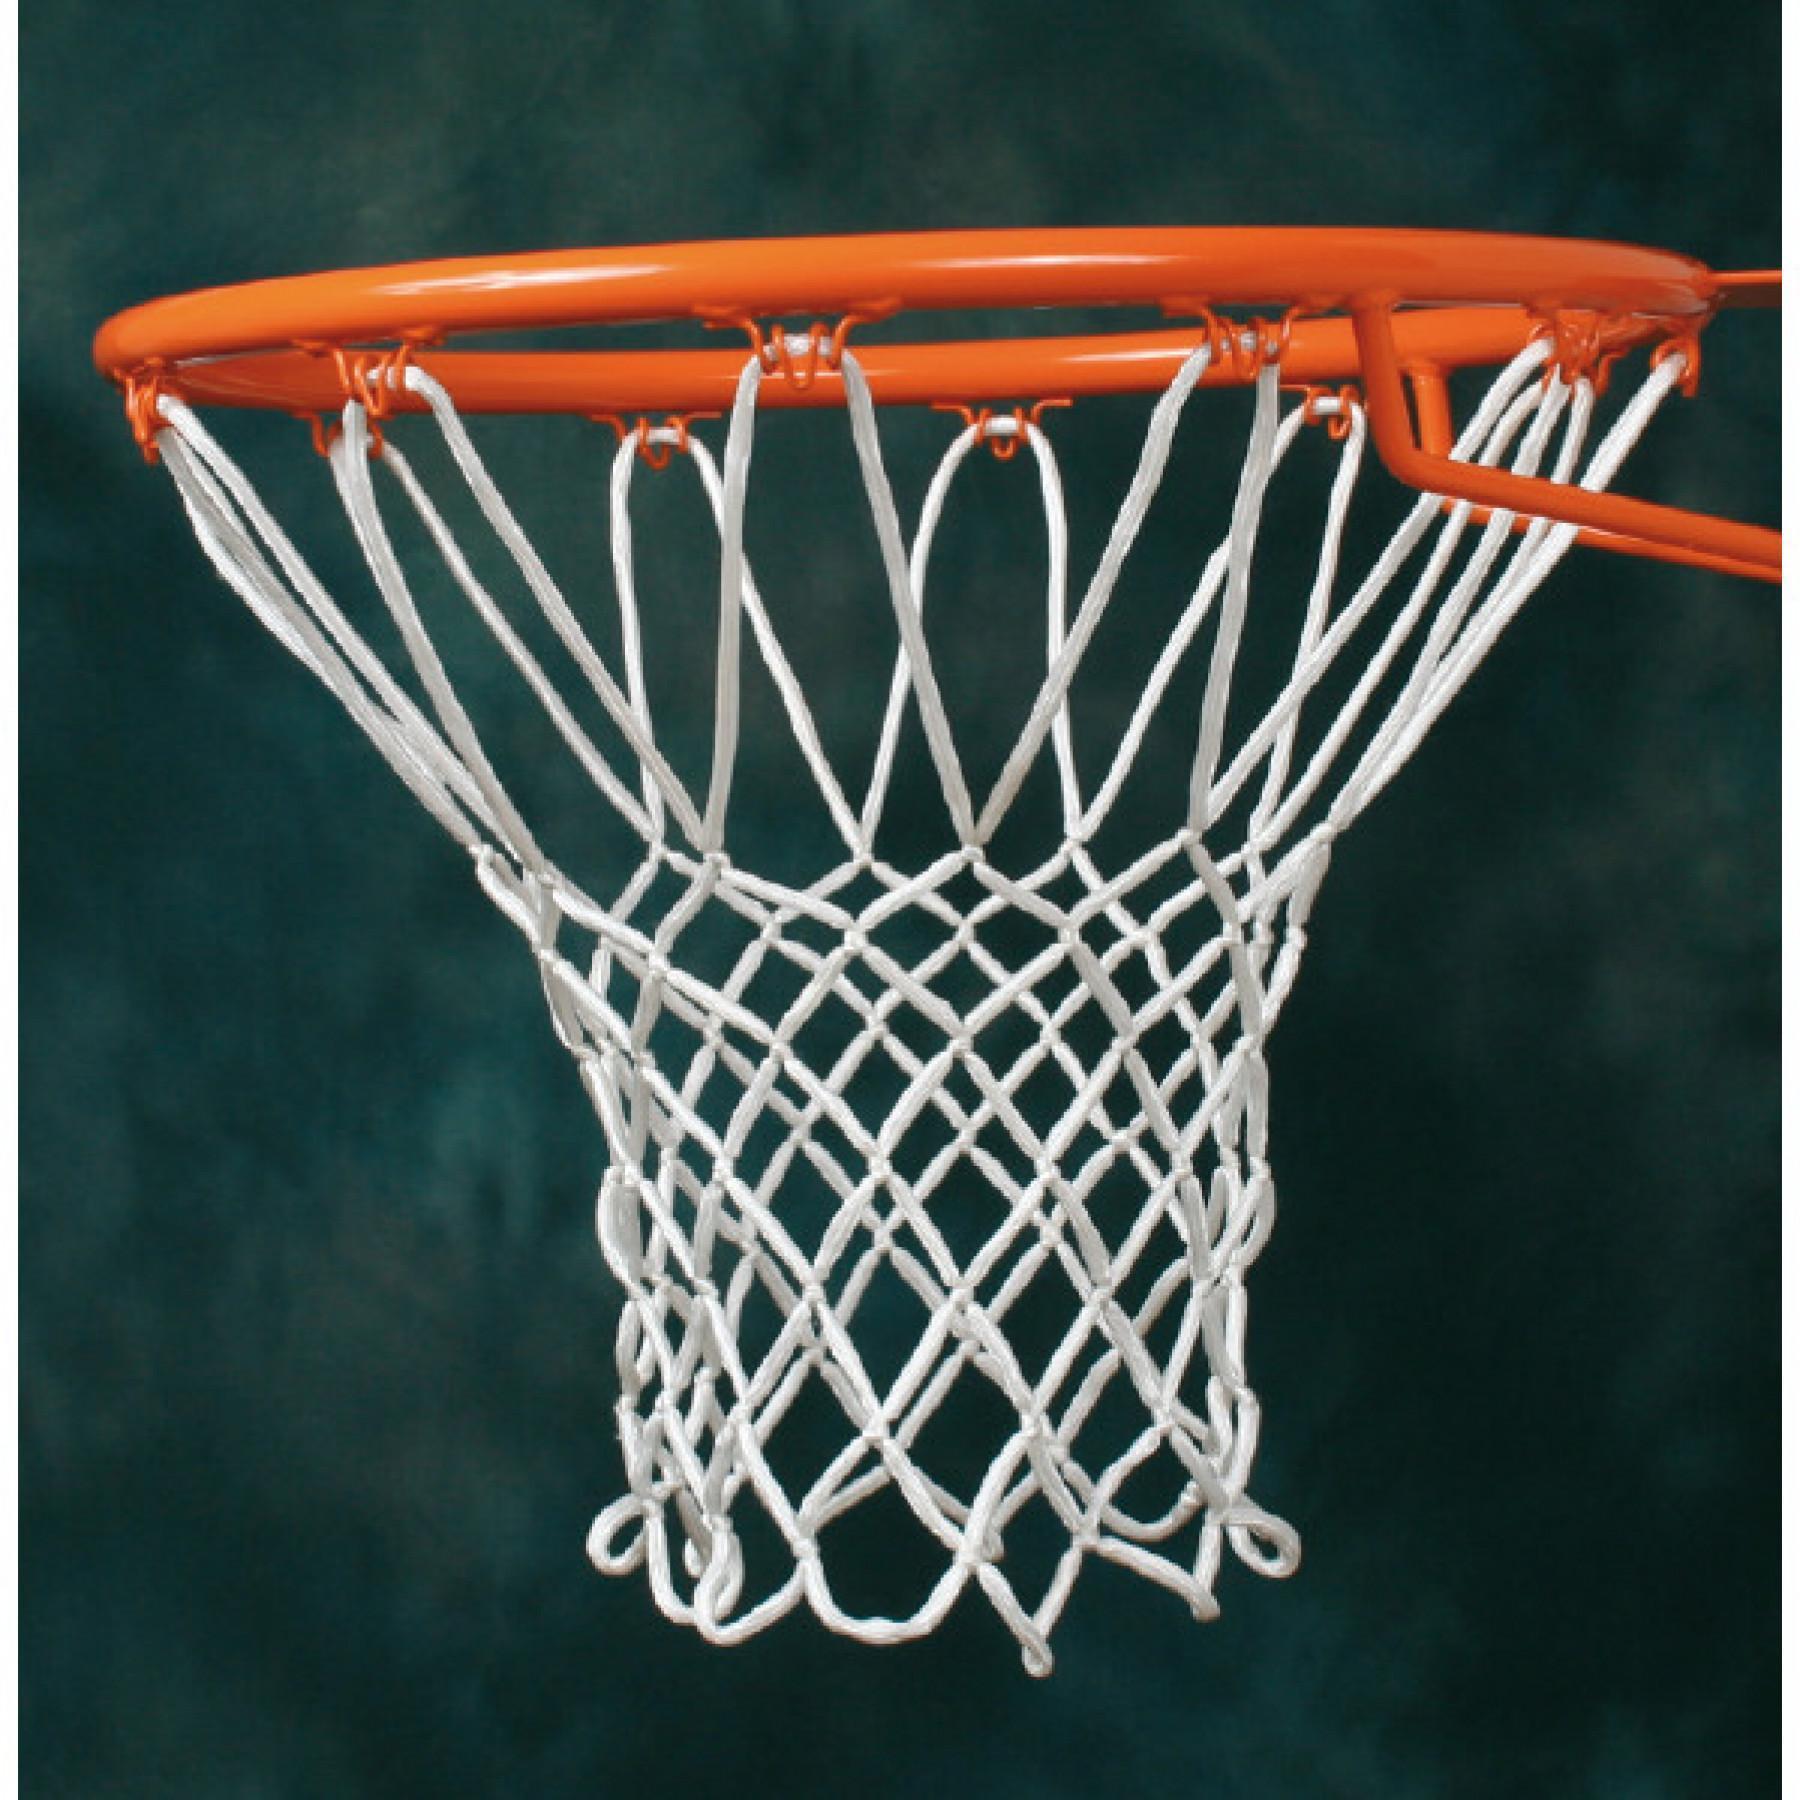 Par de redes de baloncesto de nylon (poliamida) de 4 mm Sporti Francia